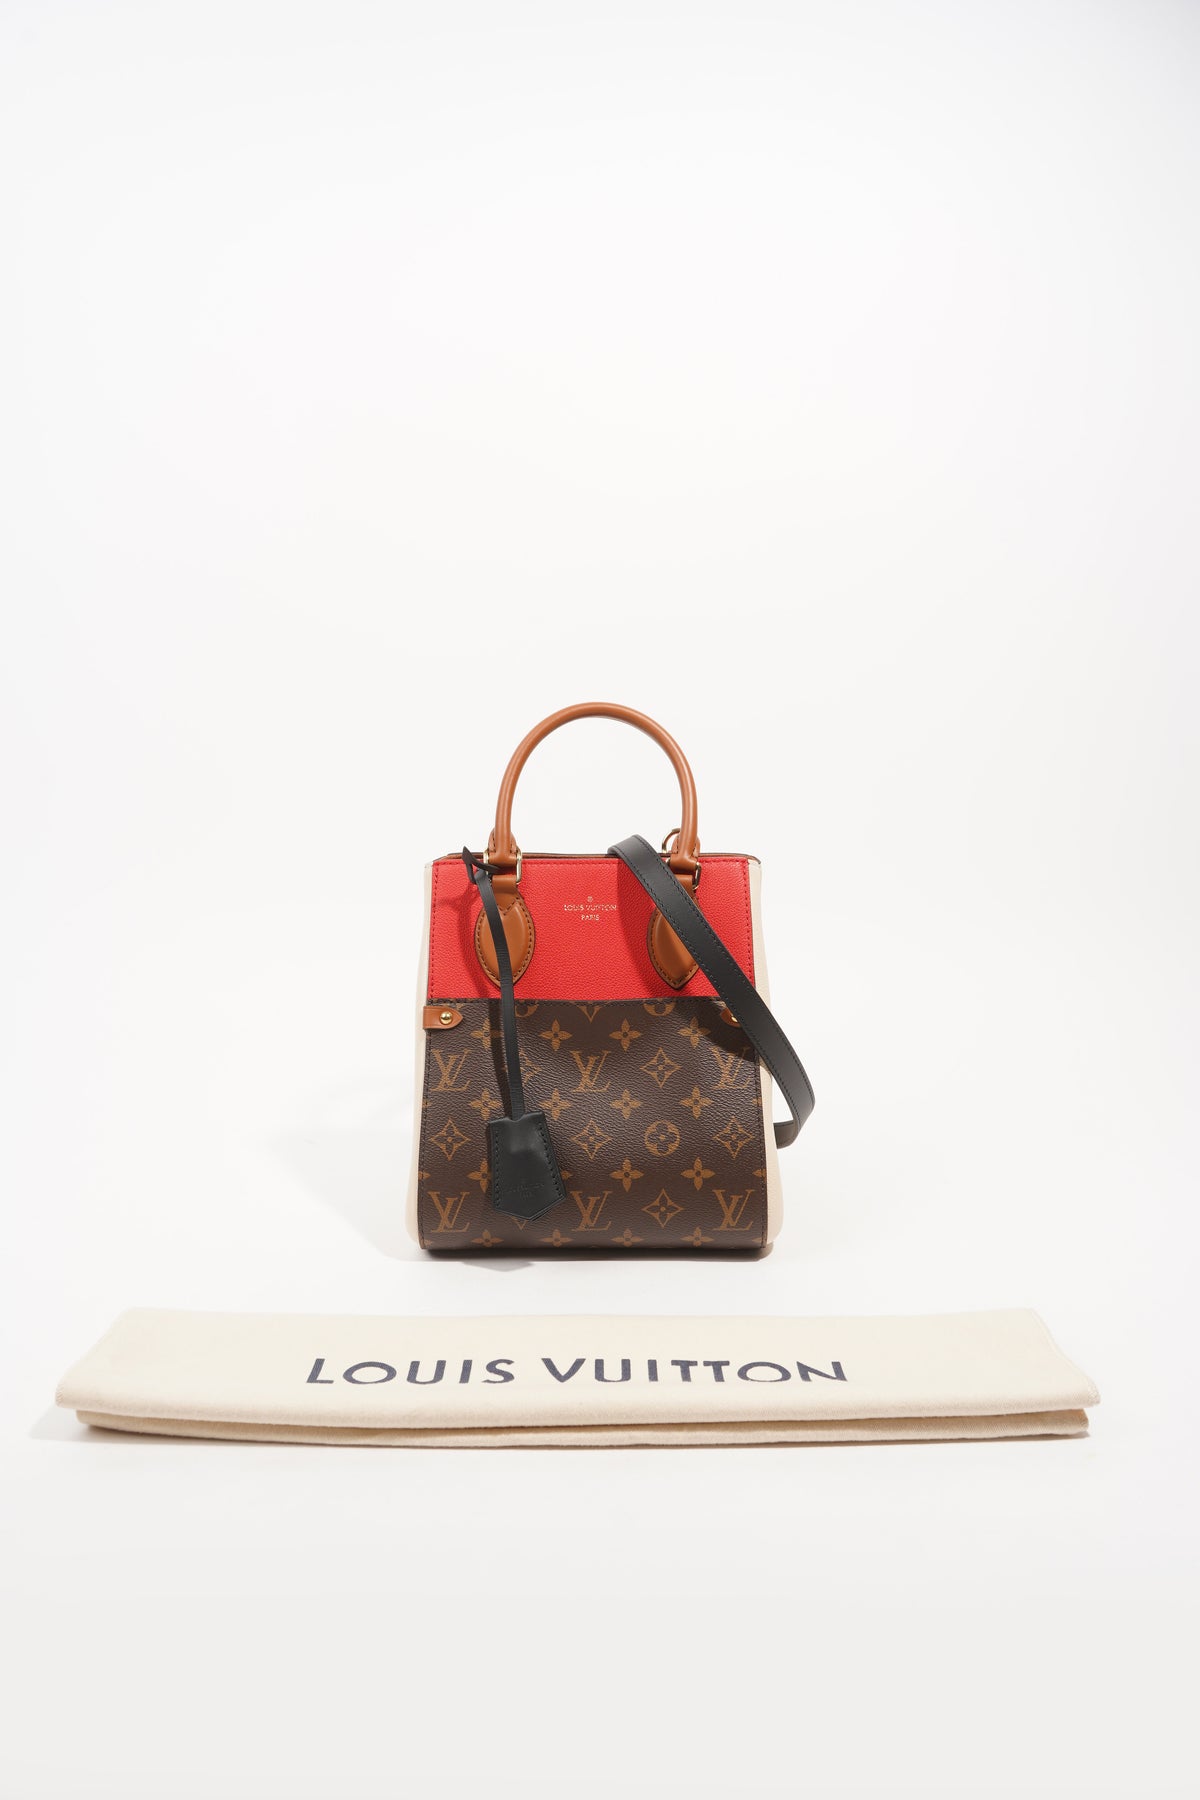 Louis Vuitton Fold Tote